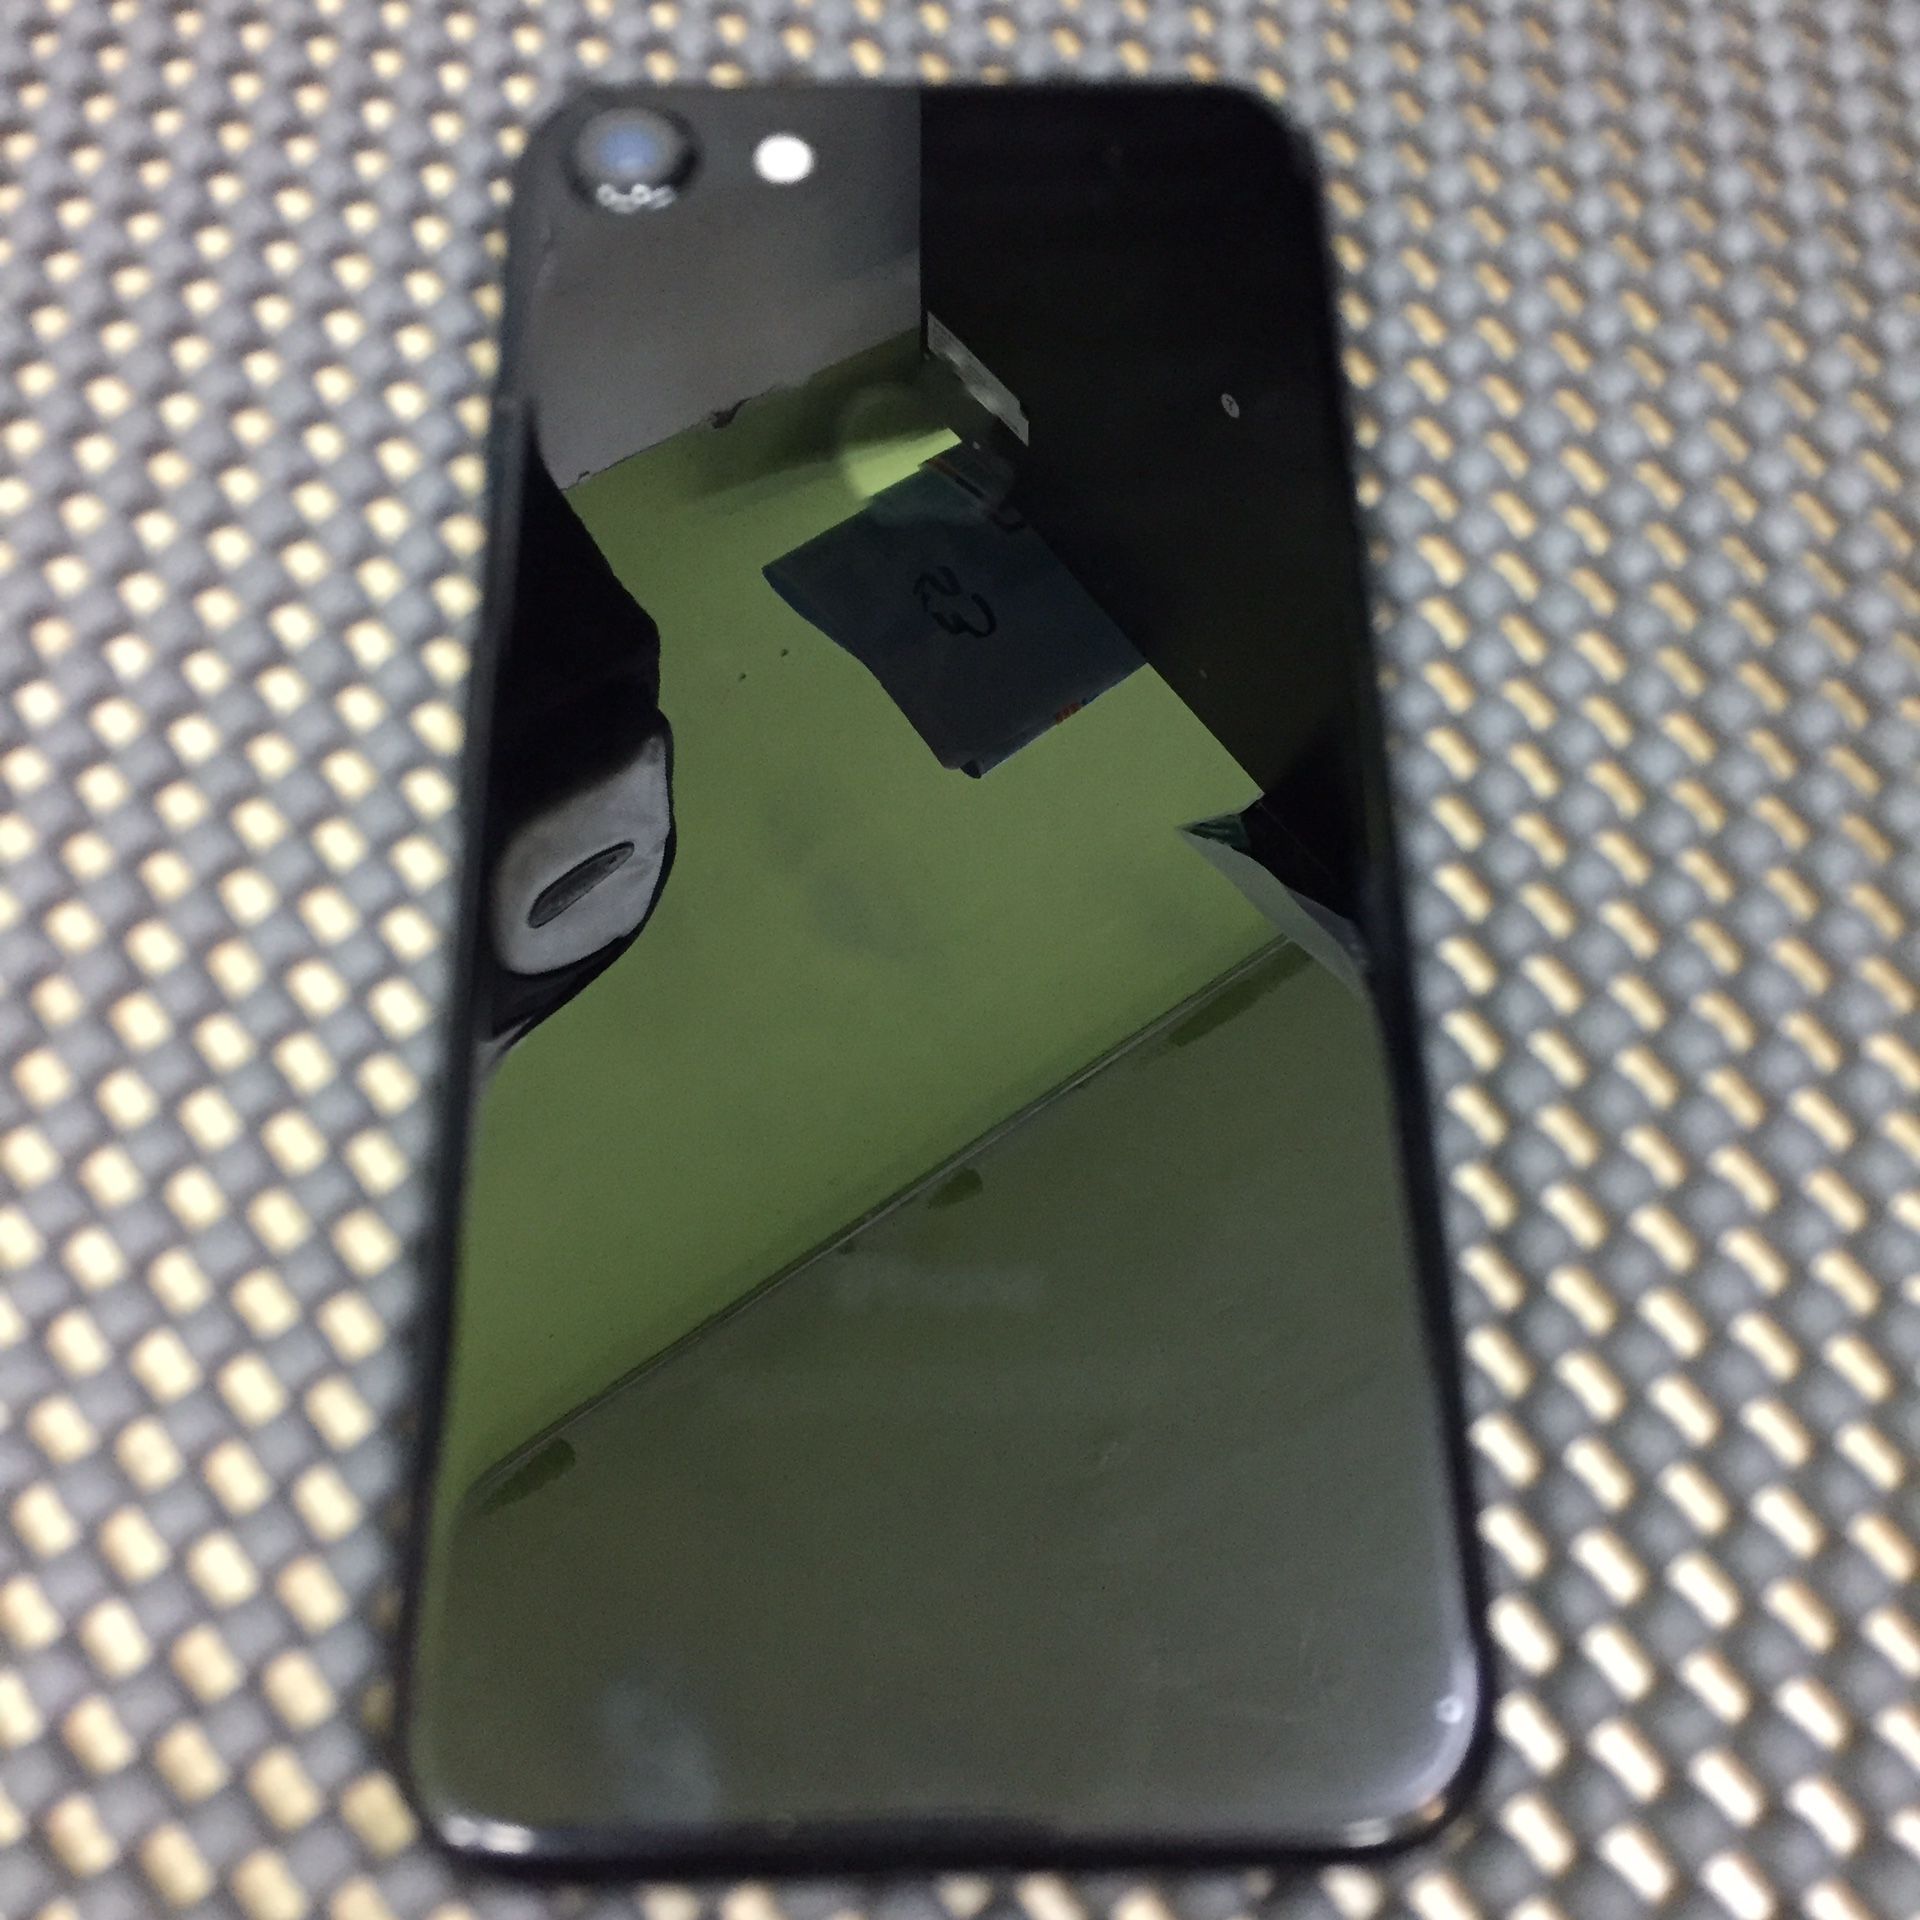 iPhone 7 128gb Jet Black Unlocked (Liberado)